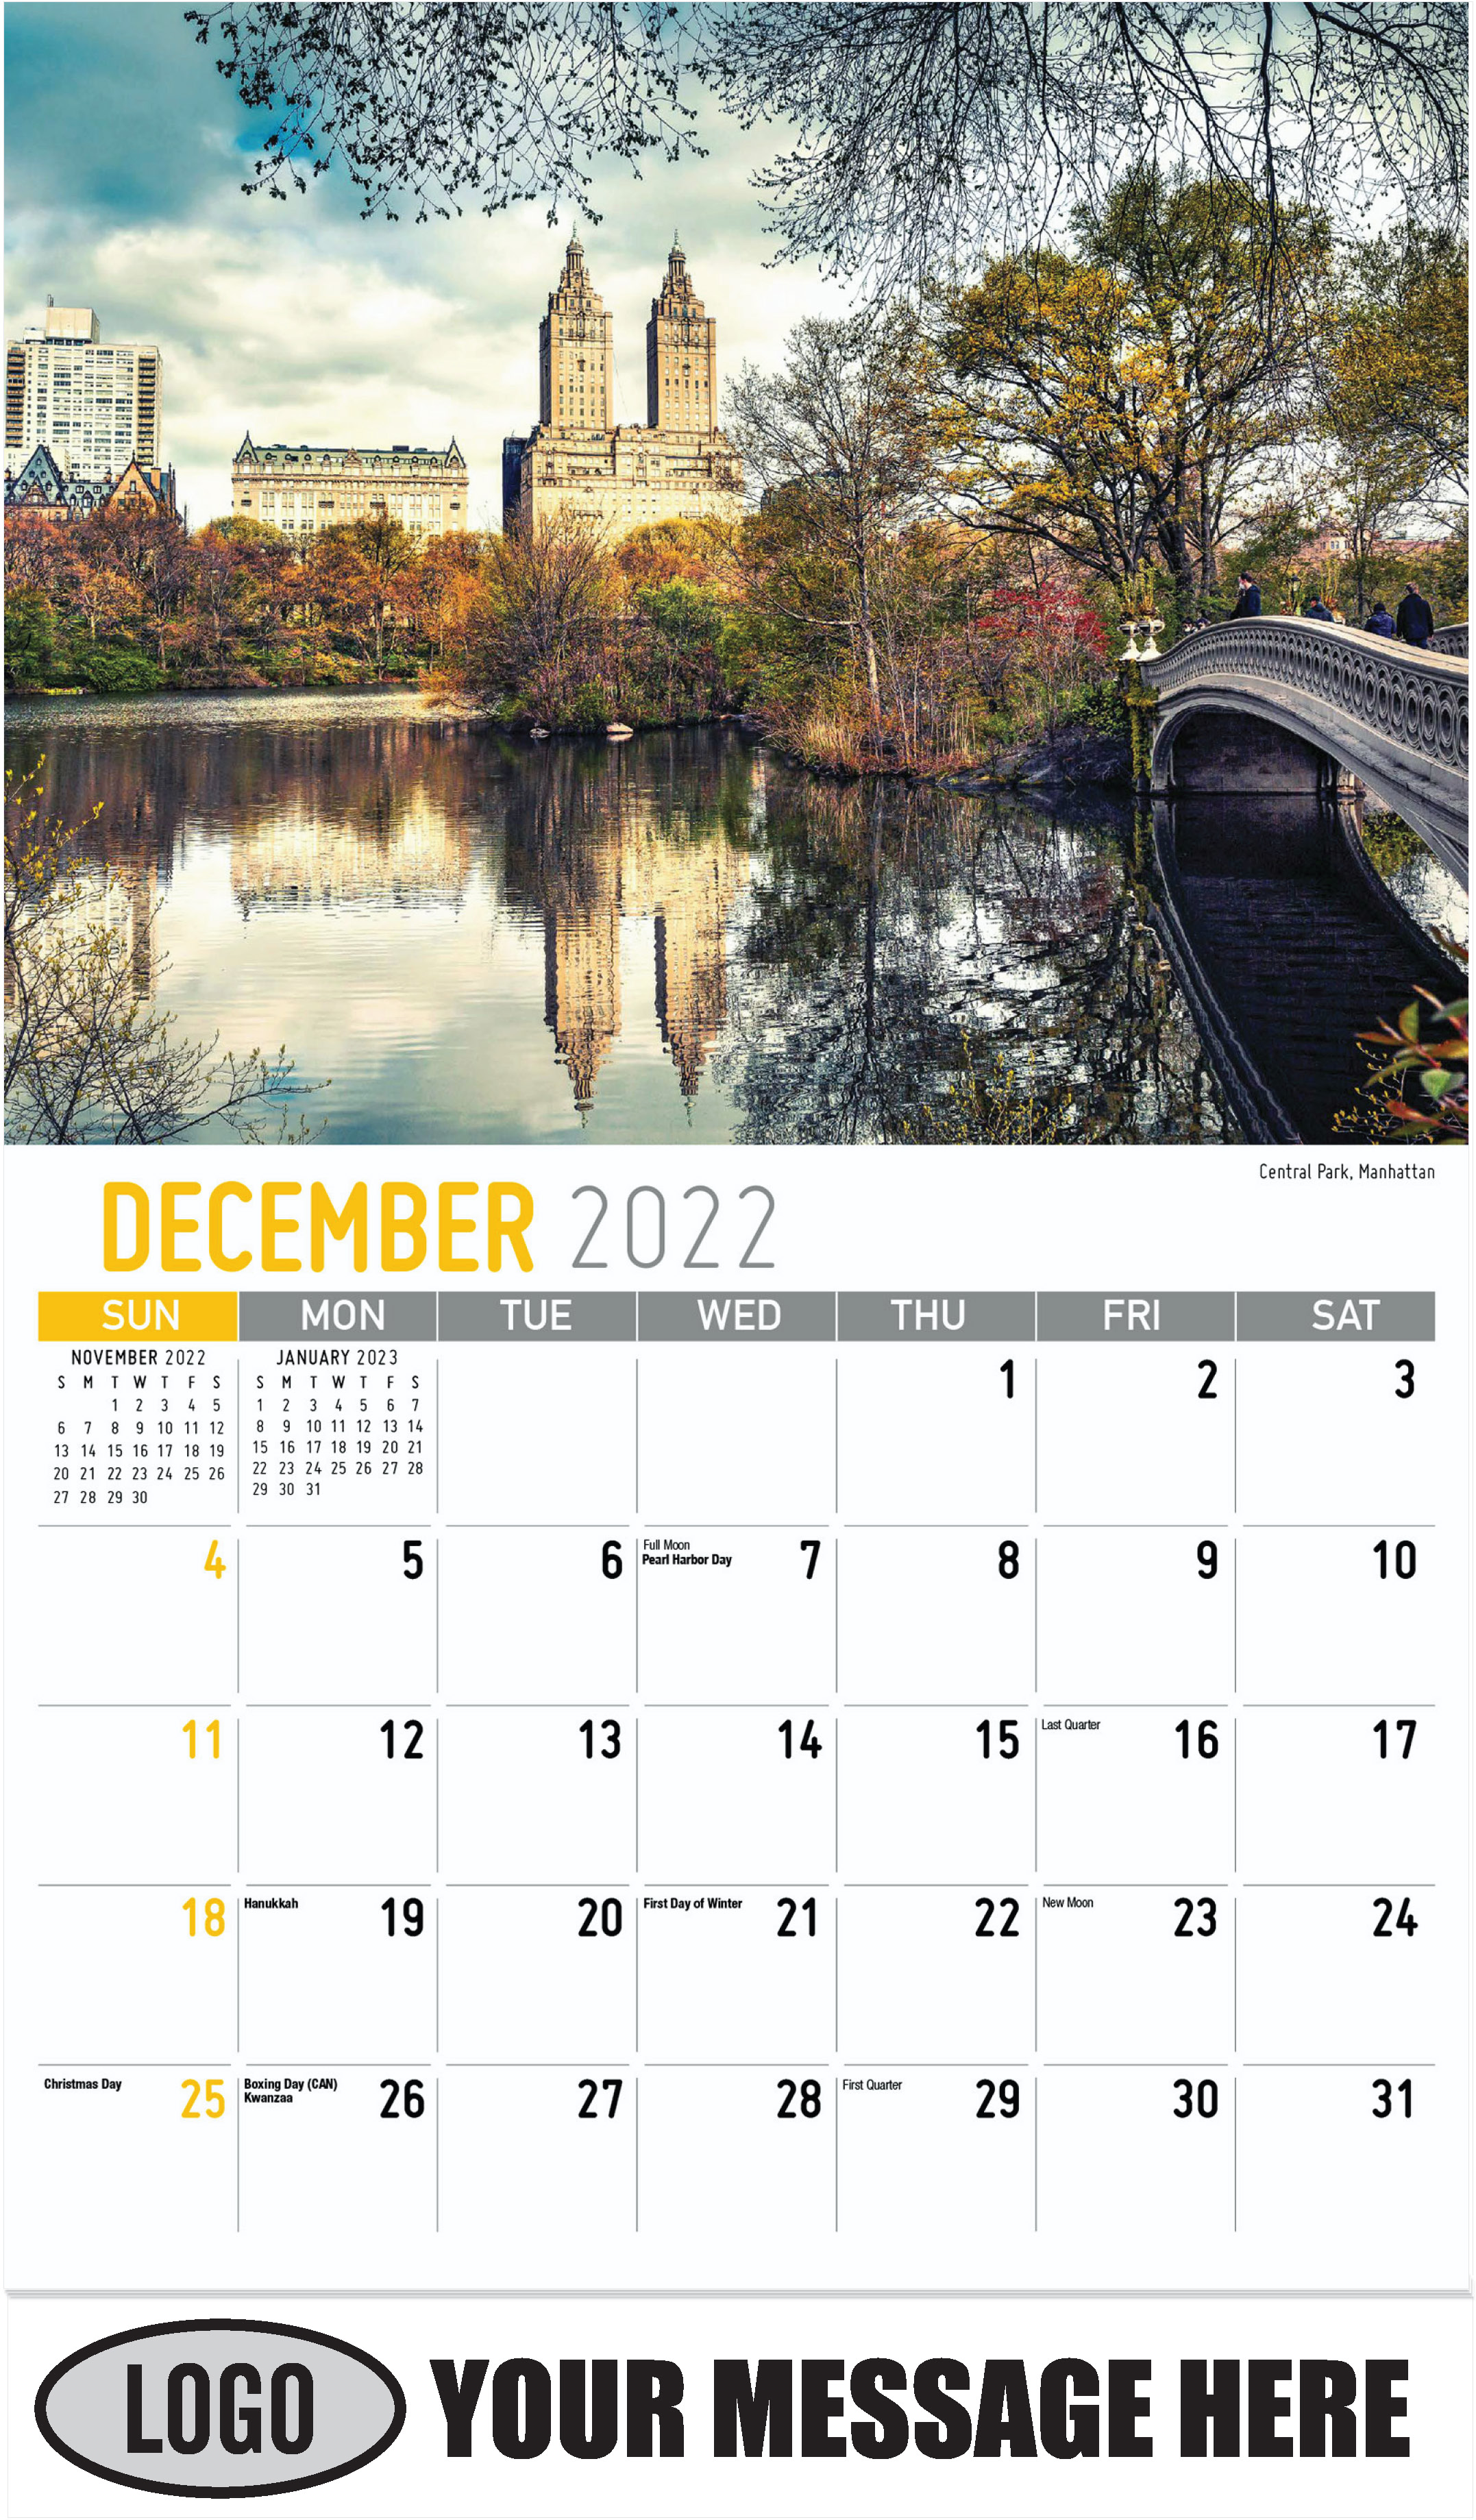 Central Park, Manhattan - December 2022 - Scenes of New York 2023 Promotional Calendar